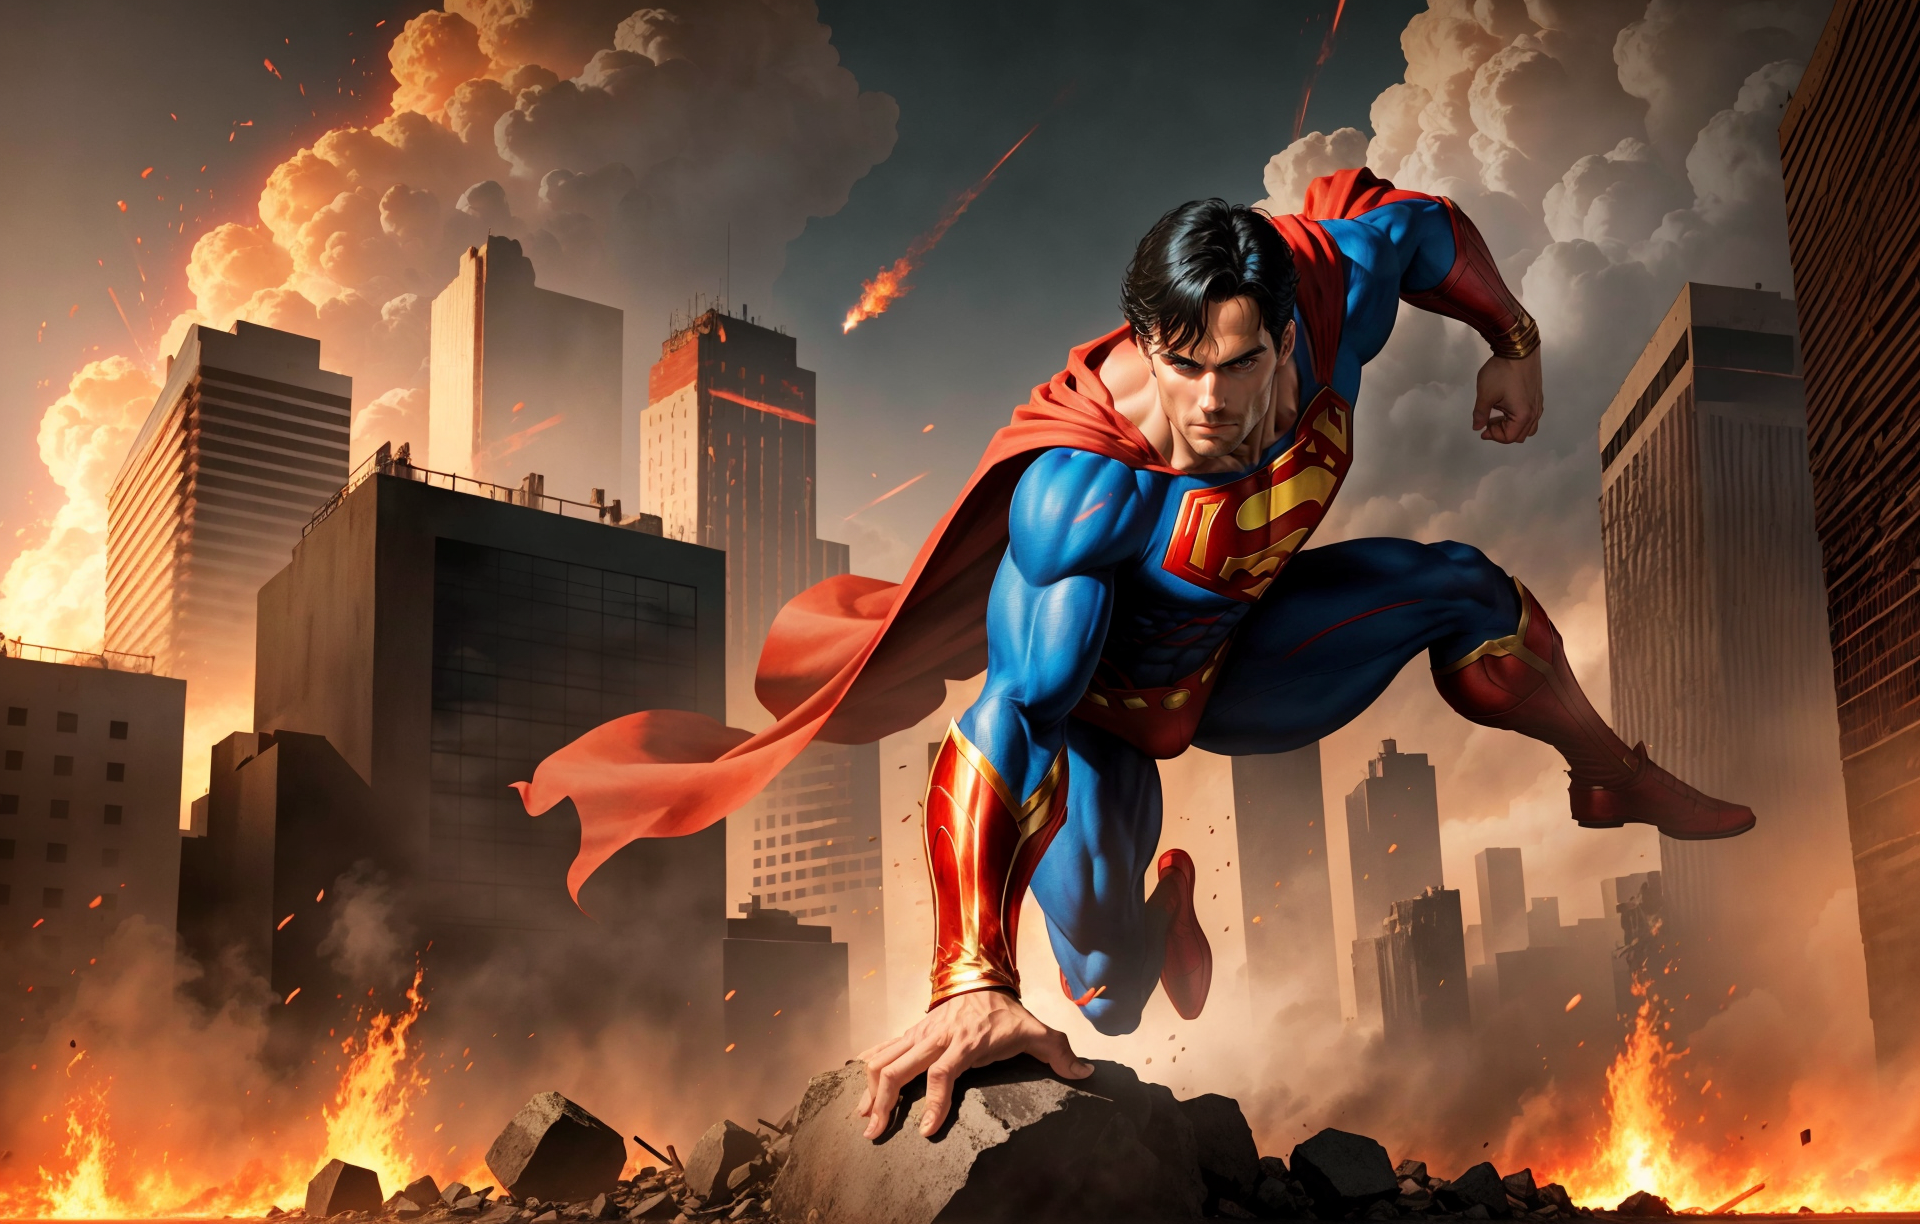 Download Henry Cavill Superman Photo Wallpaper